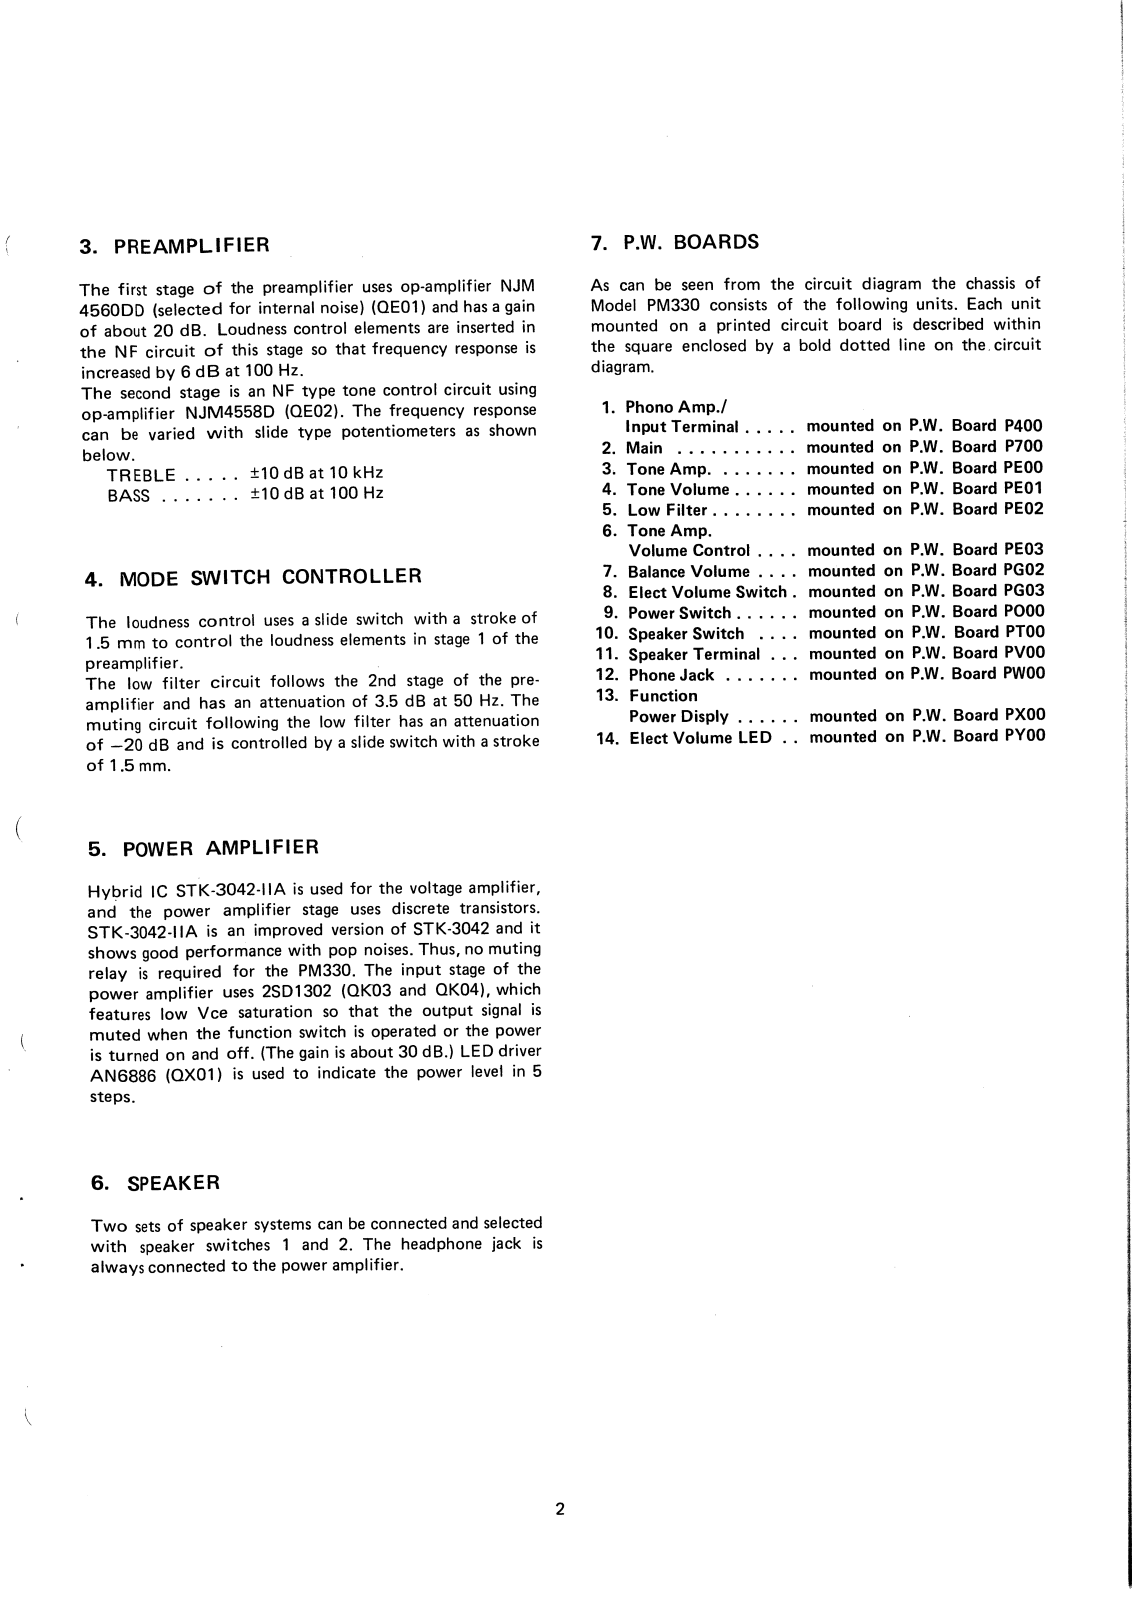 Service Manual-Anleitung für Marantz PM-330 